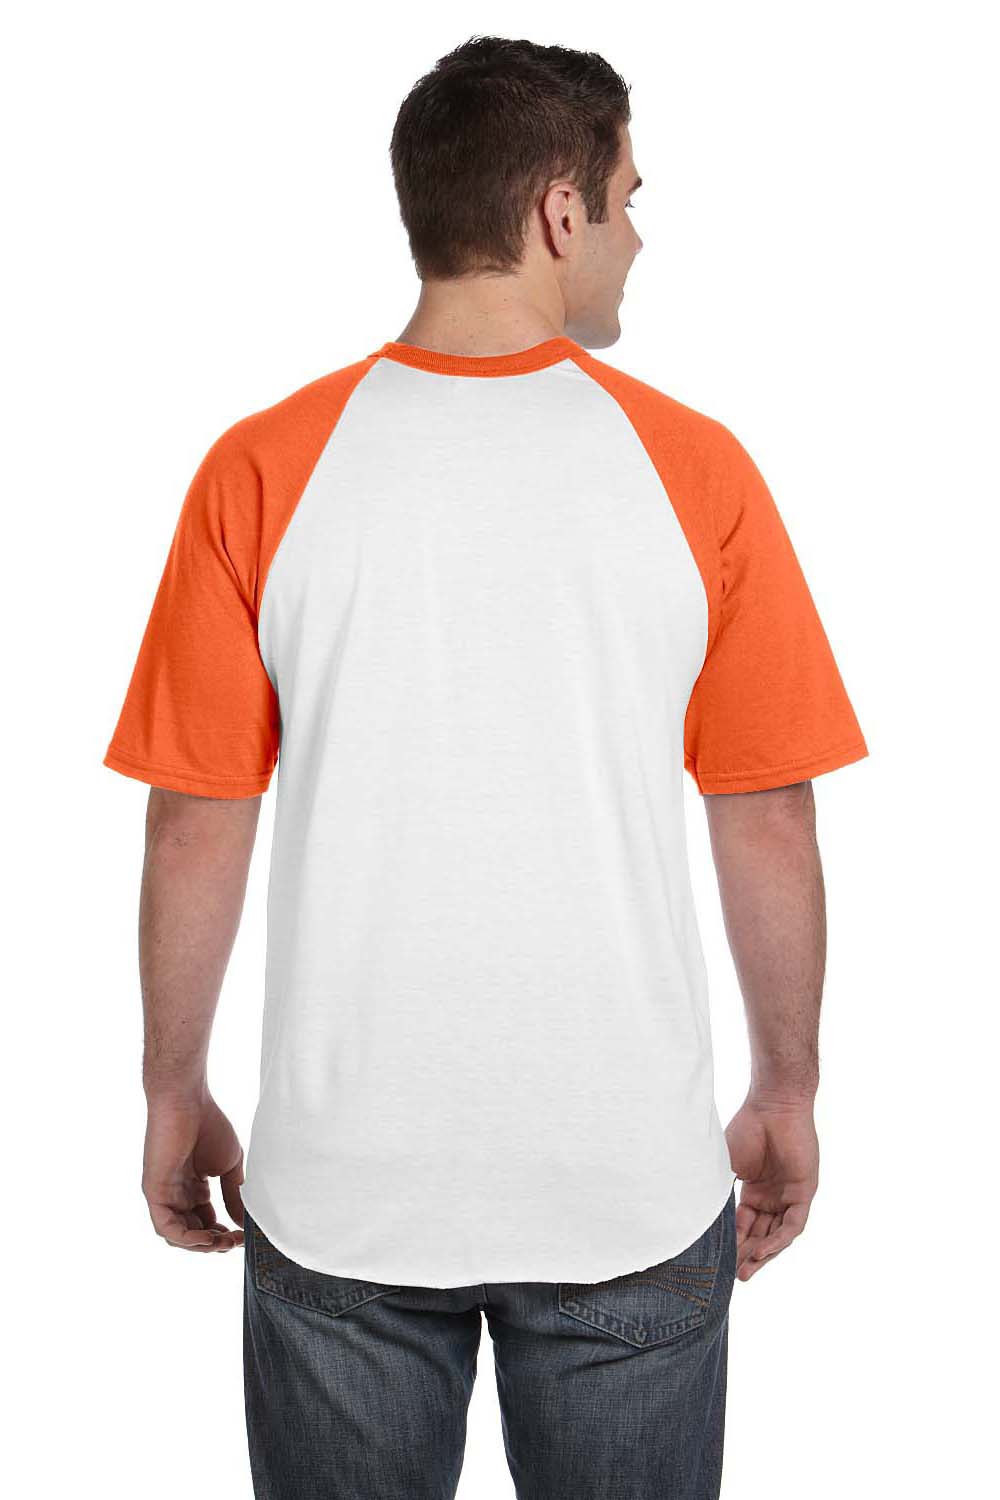 Augusta Sportswear 423 Mens Short Sleeve Crewneck T-Shirt White/Orange Model Back